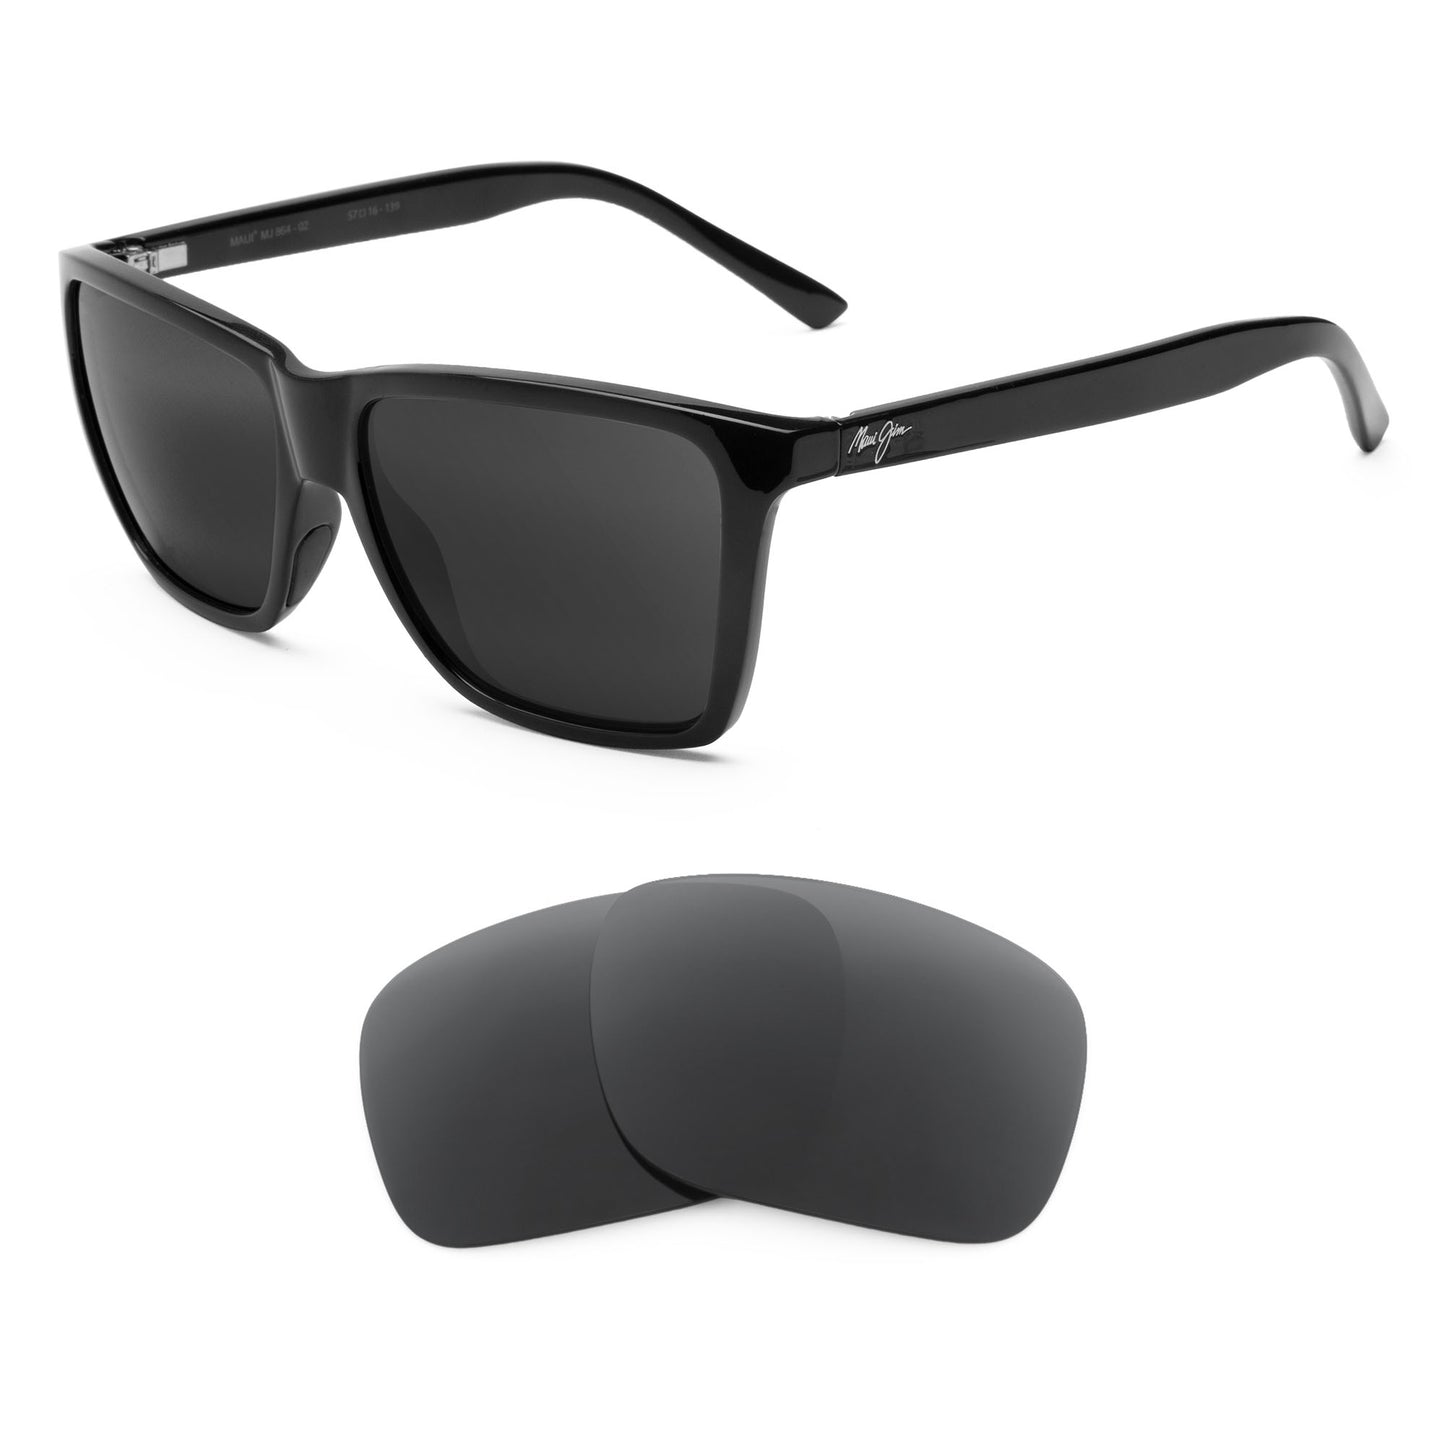 Maui Jim Cruzem MJ864 sunglasses with replacement lenses